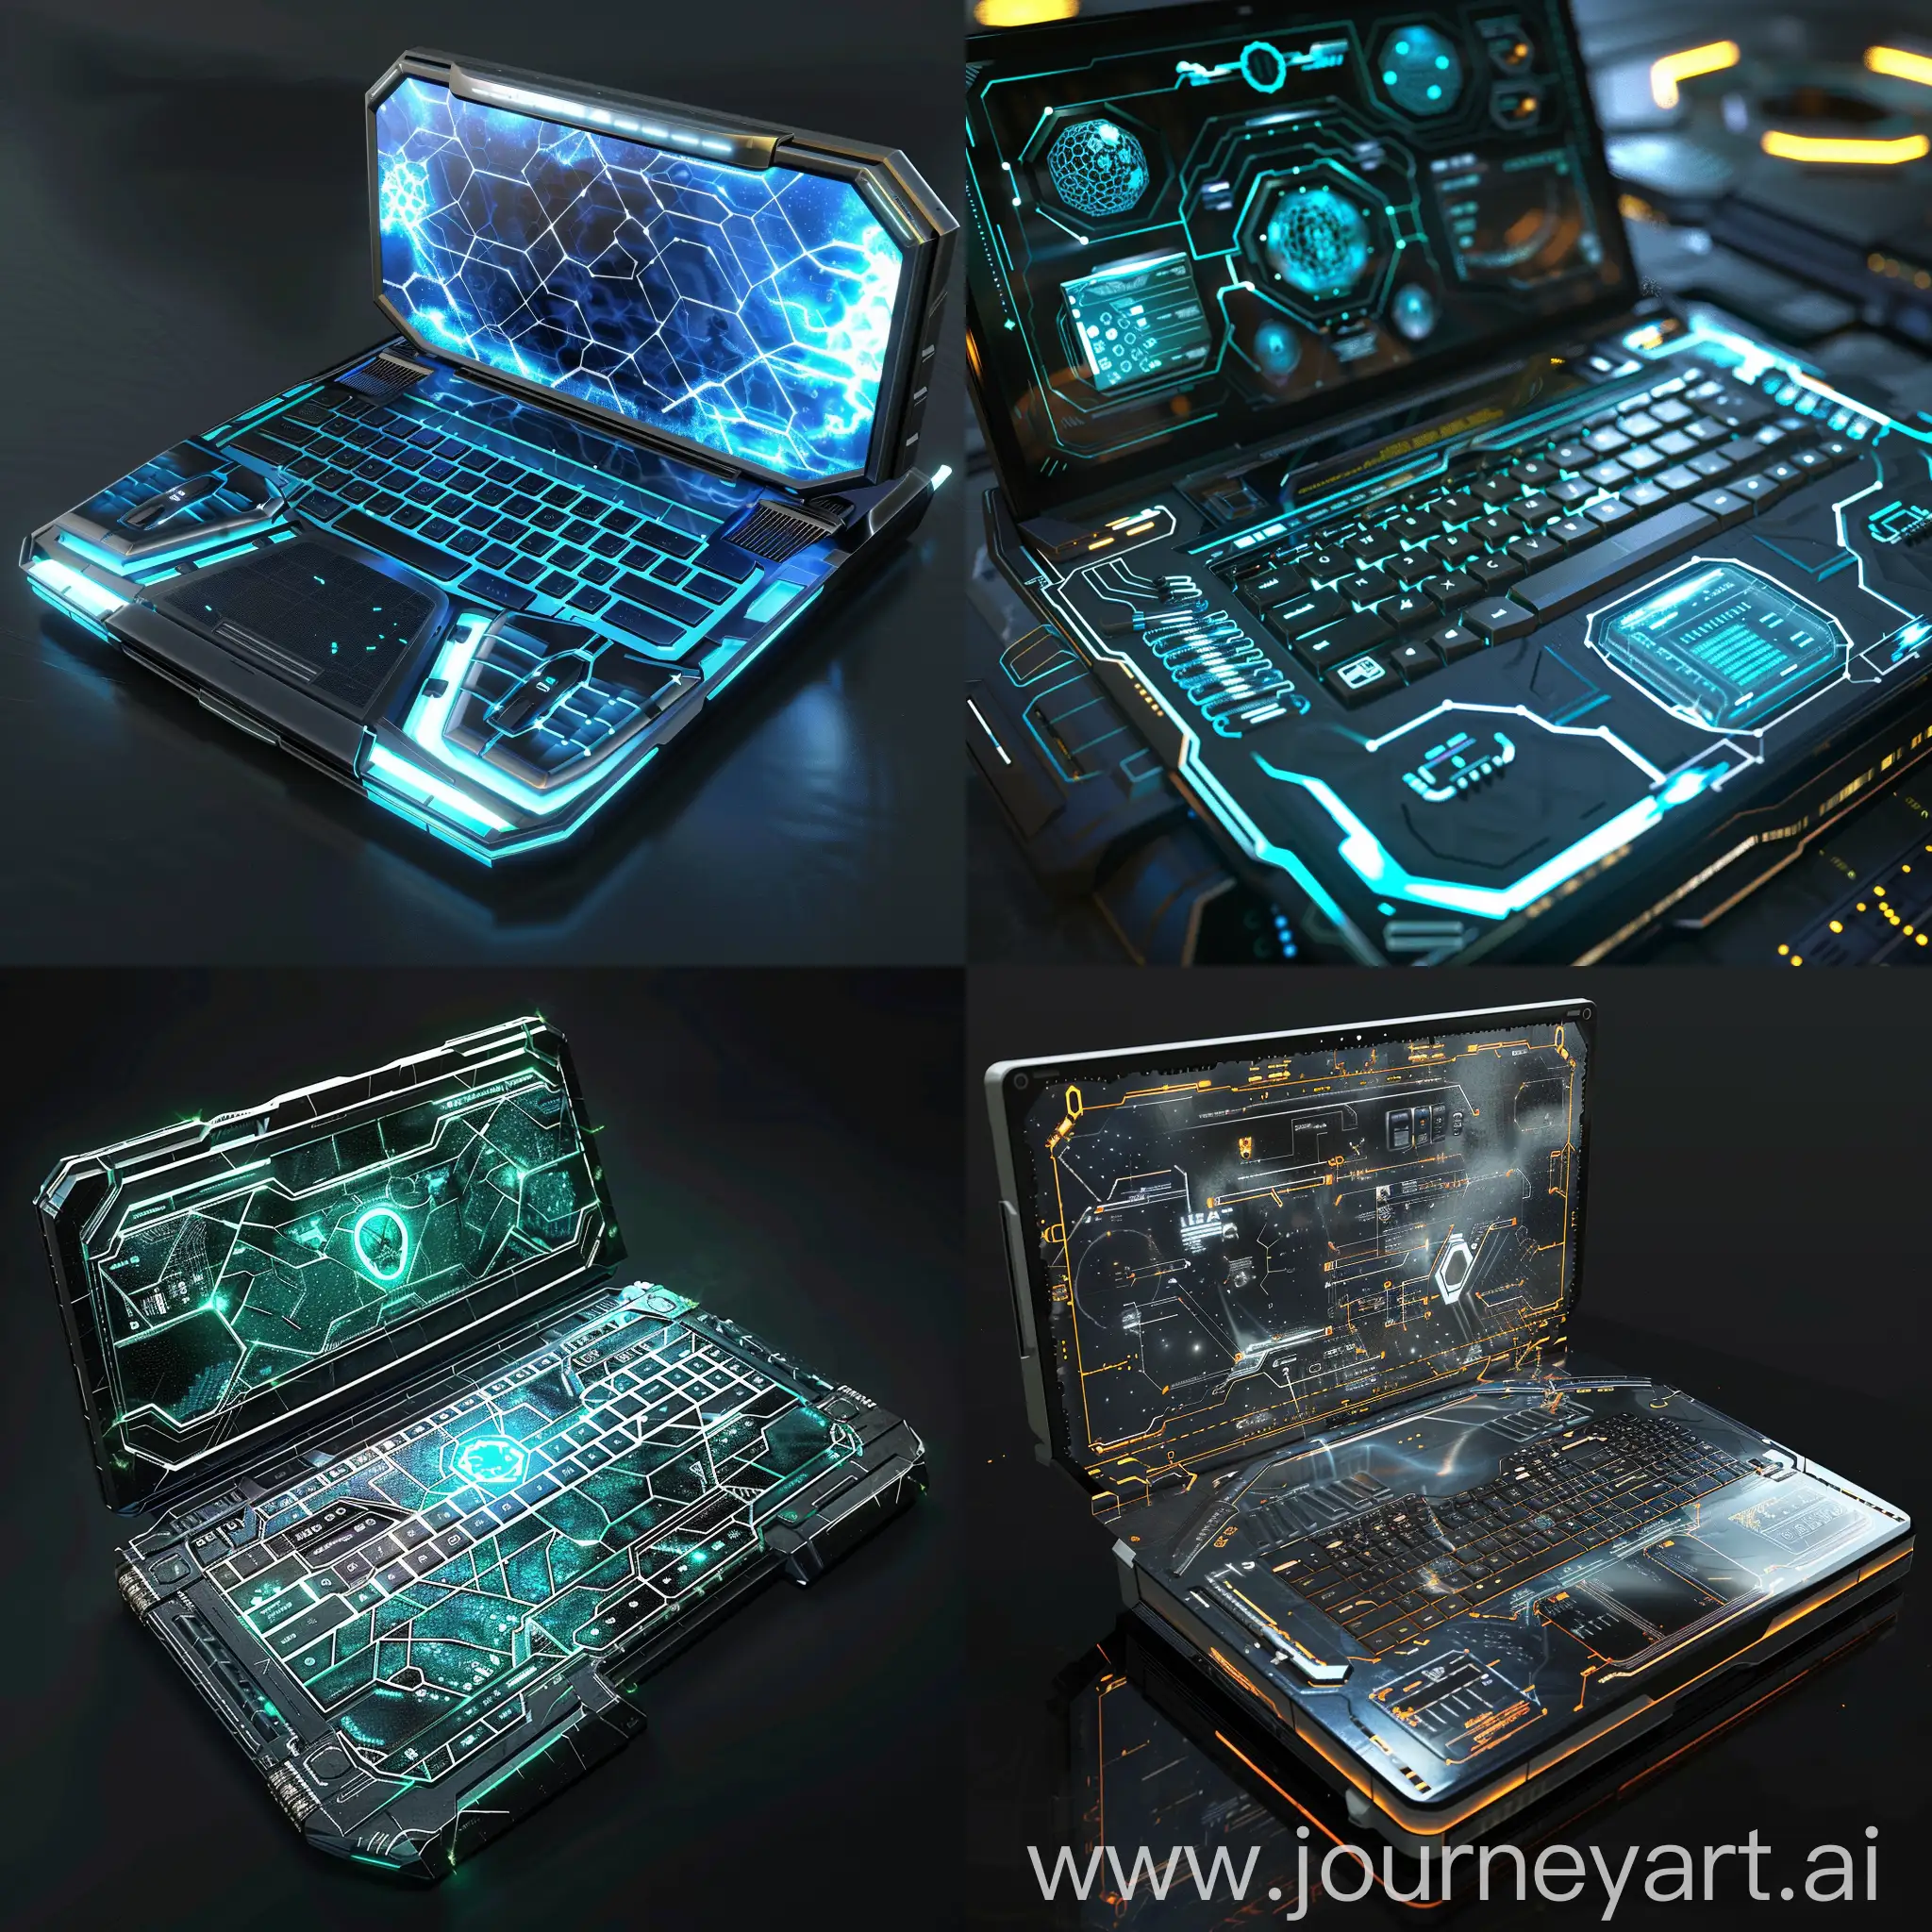 Futuristic-SciFi-Laptop-with-Molecular-Memory-Storage-and-Quantum-Processors